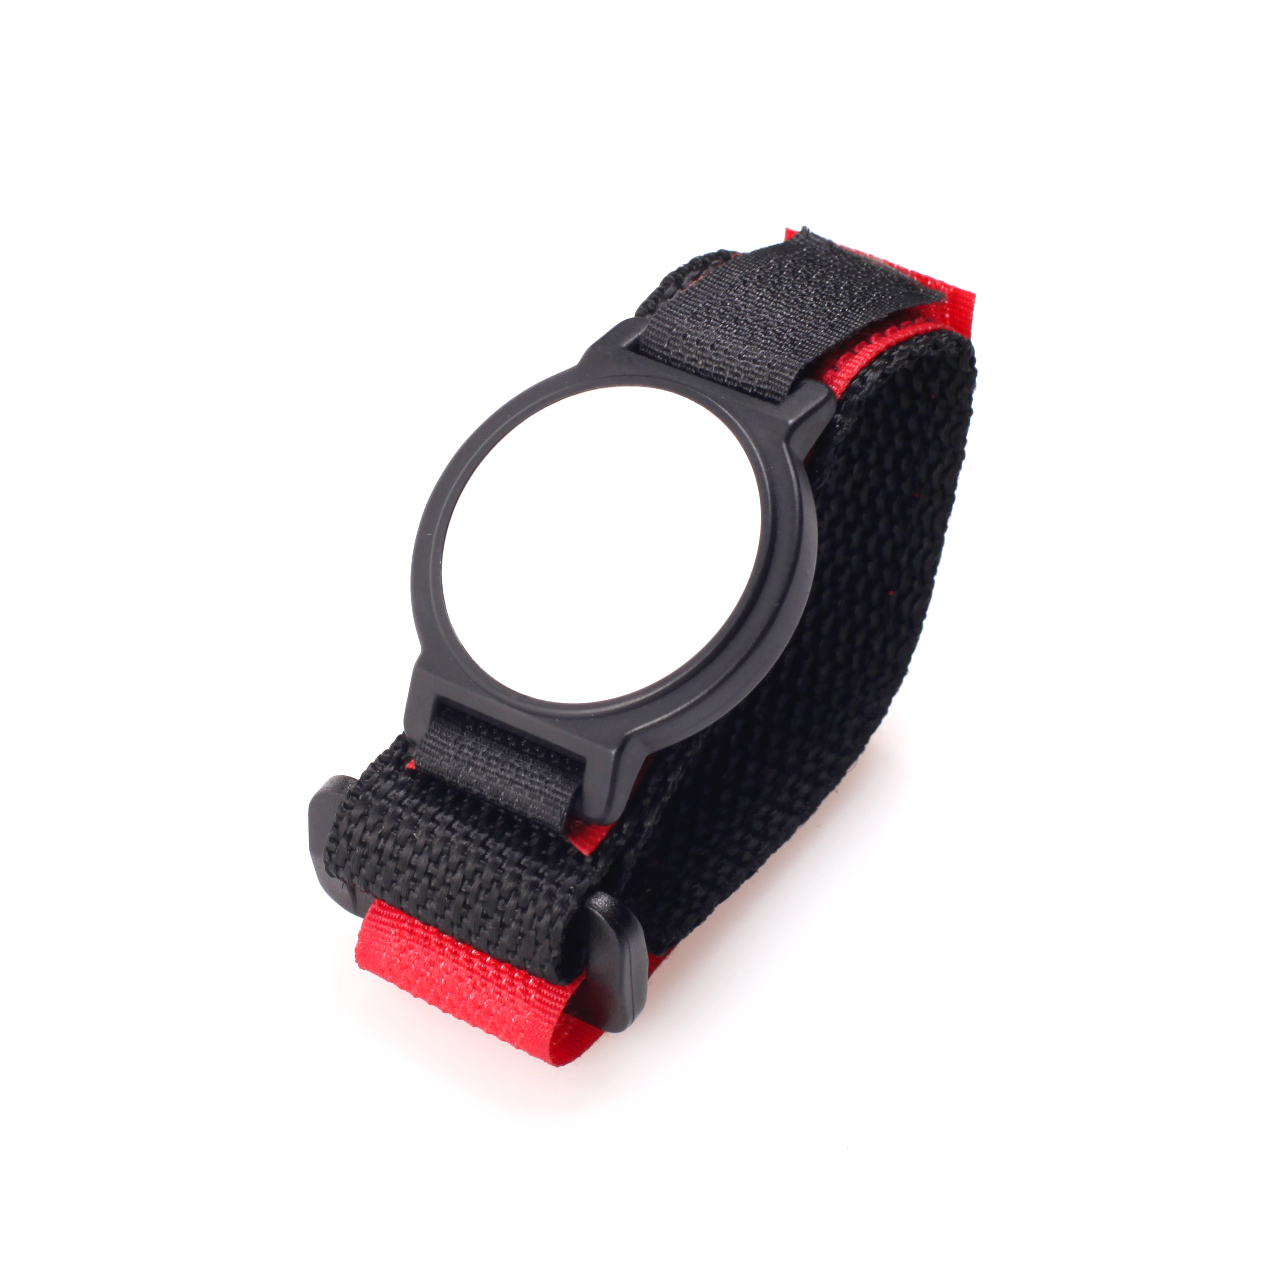 NXP Mifare S50 RFID Nylon Wristbands,13.56MHz Proximity Rewritable RFID bracelet